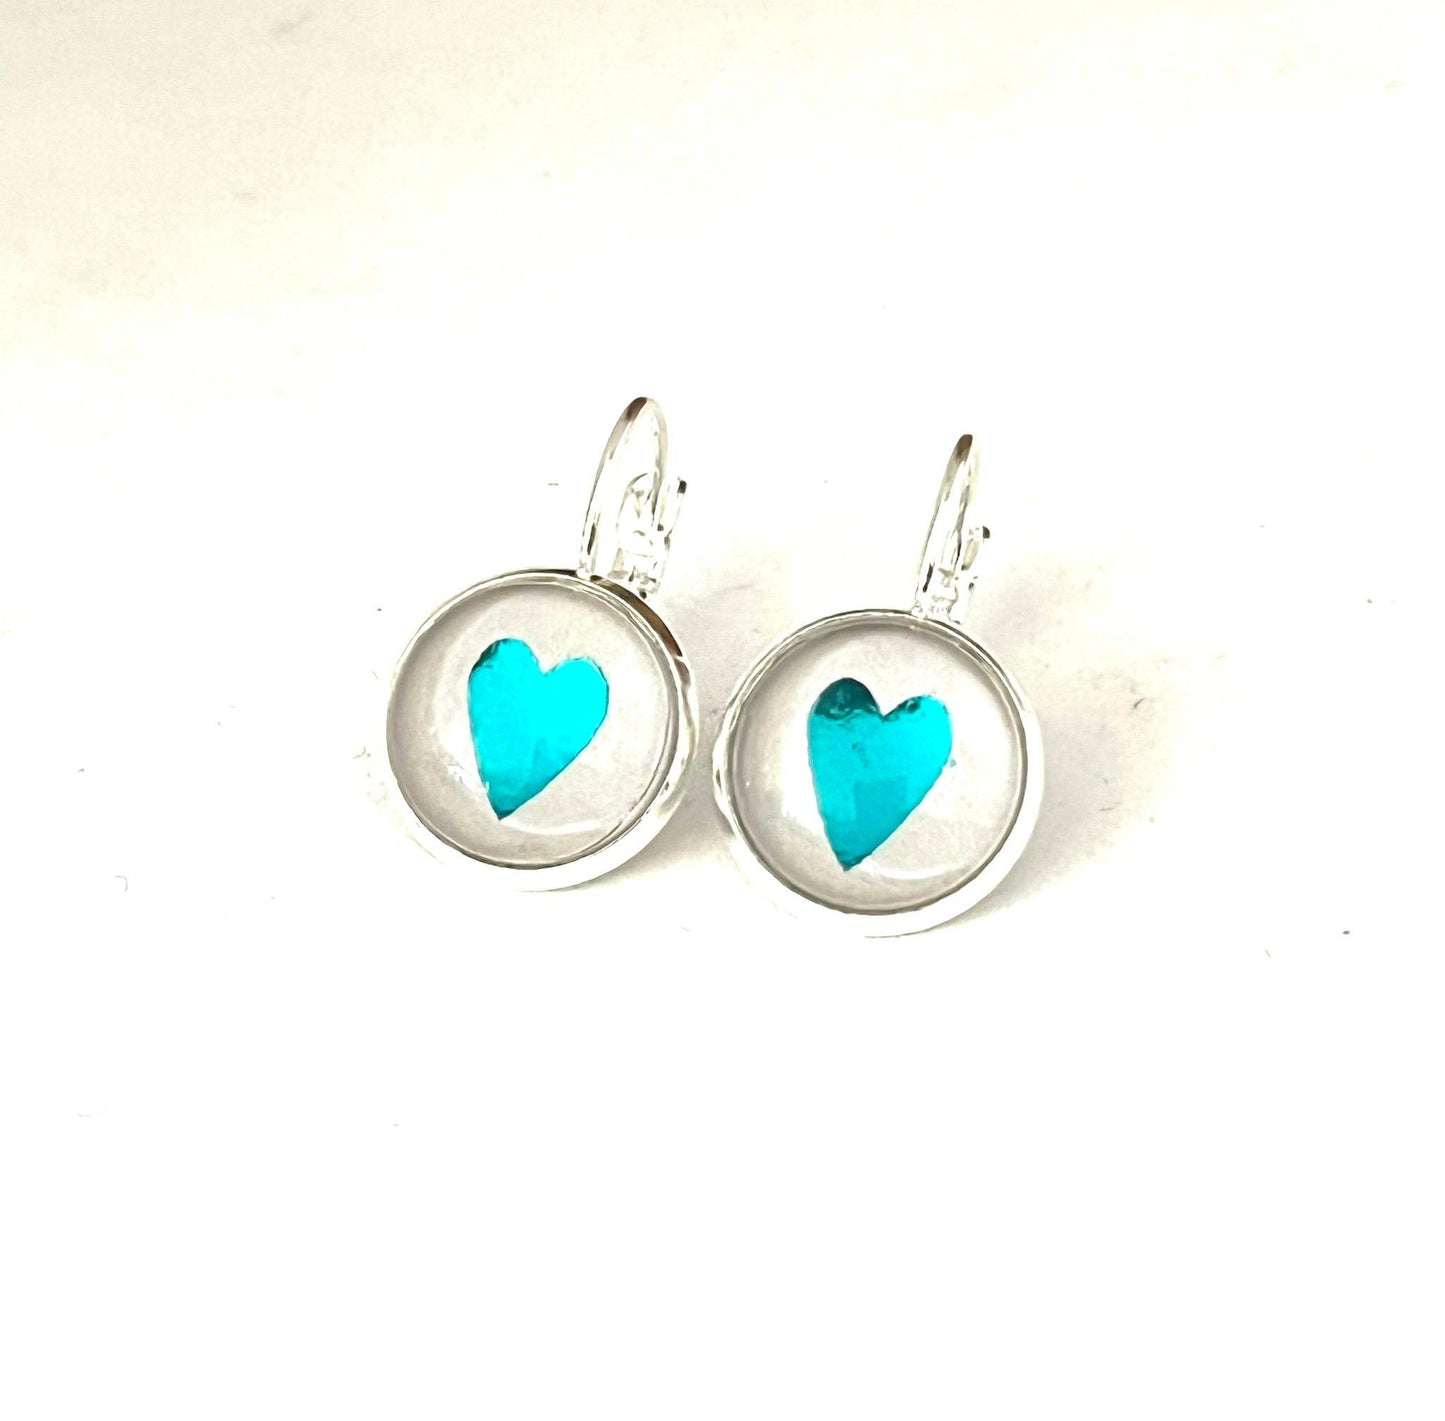 Beauitful Aqua blue heart glass dome earrings in a silver setting